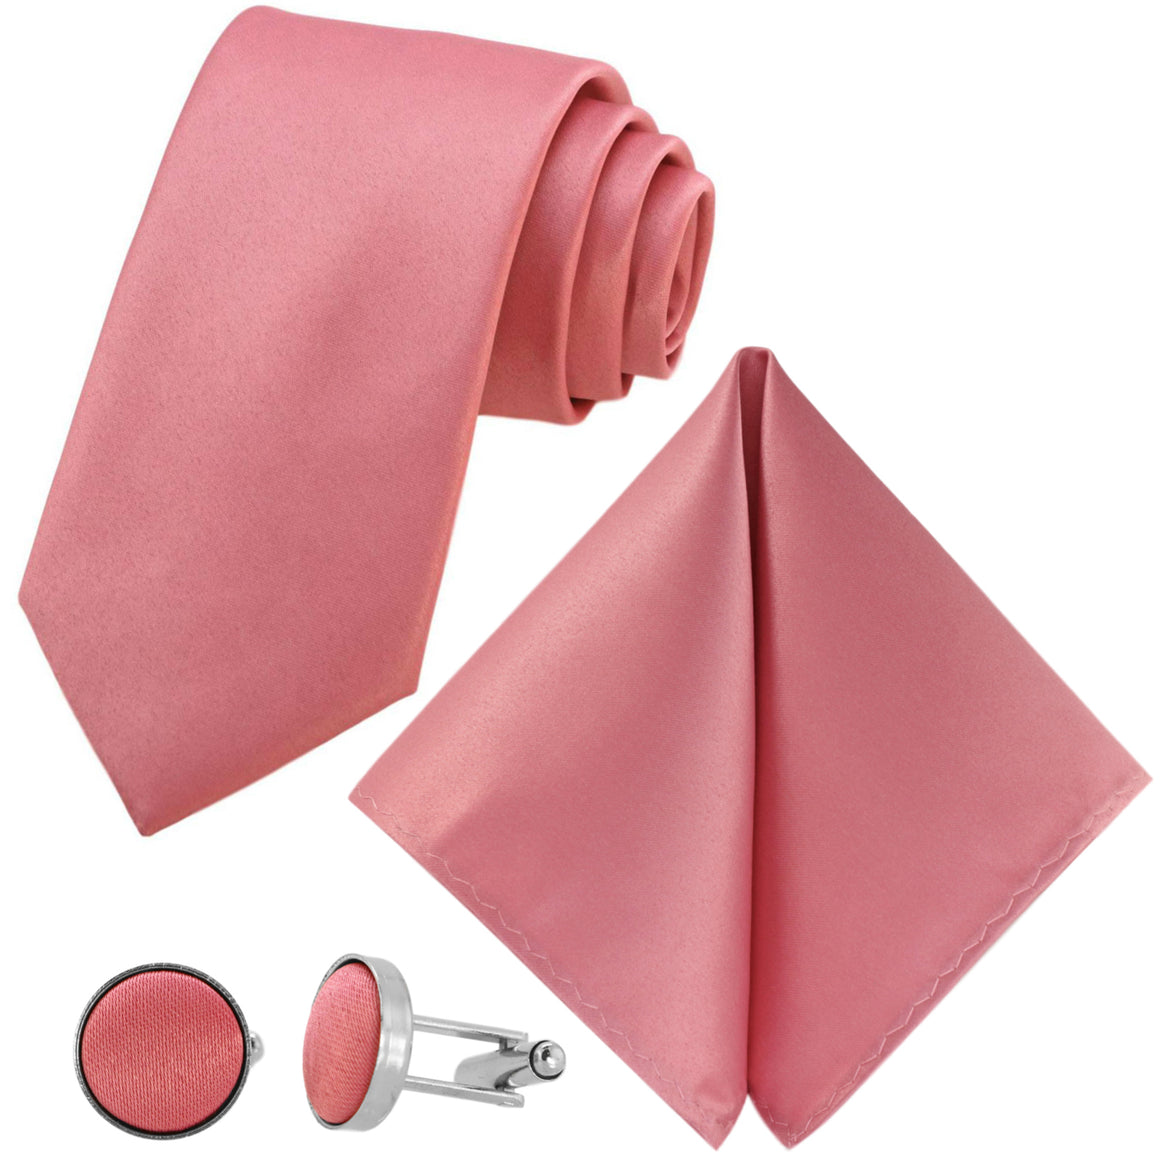 Parure cravatta GASSANI 3-SET, larghezza cm 8. Cravatta da uomo lunga in rosa, cravatta da sposa stretta